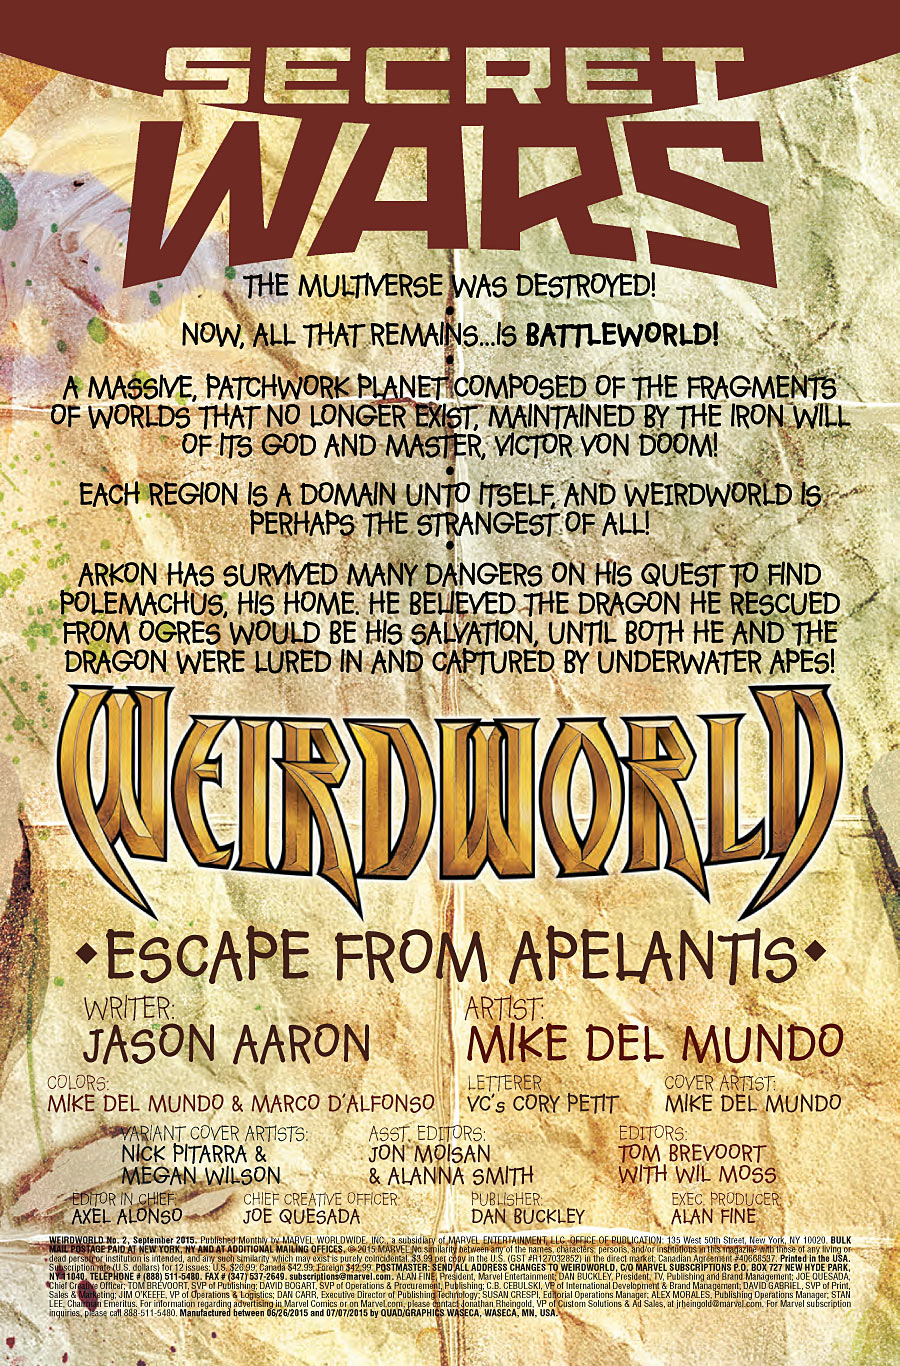 Weirdworld #2